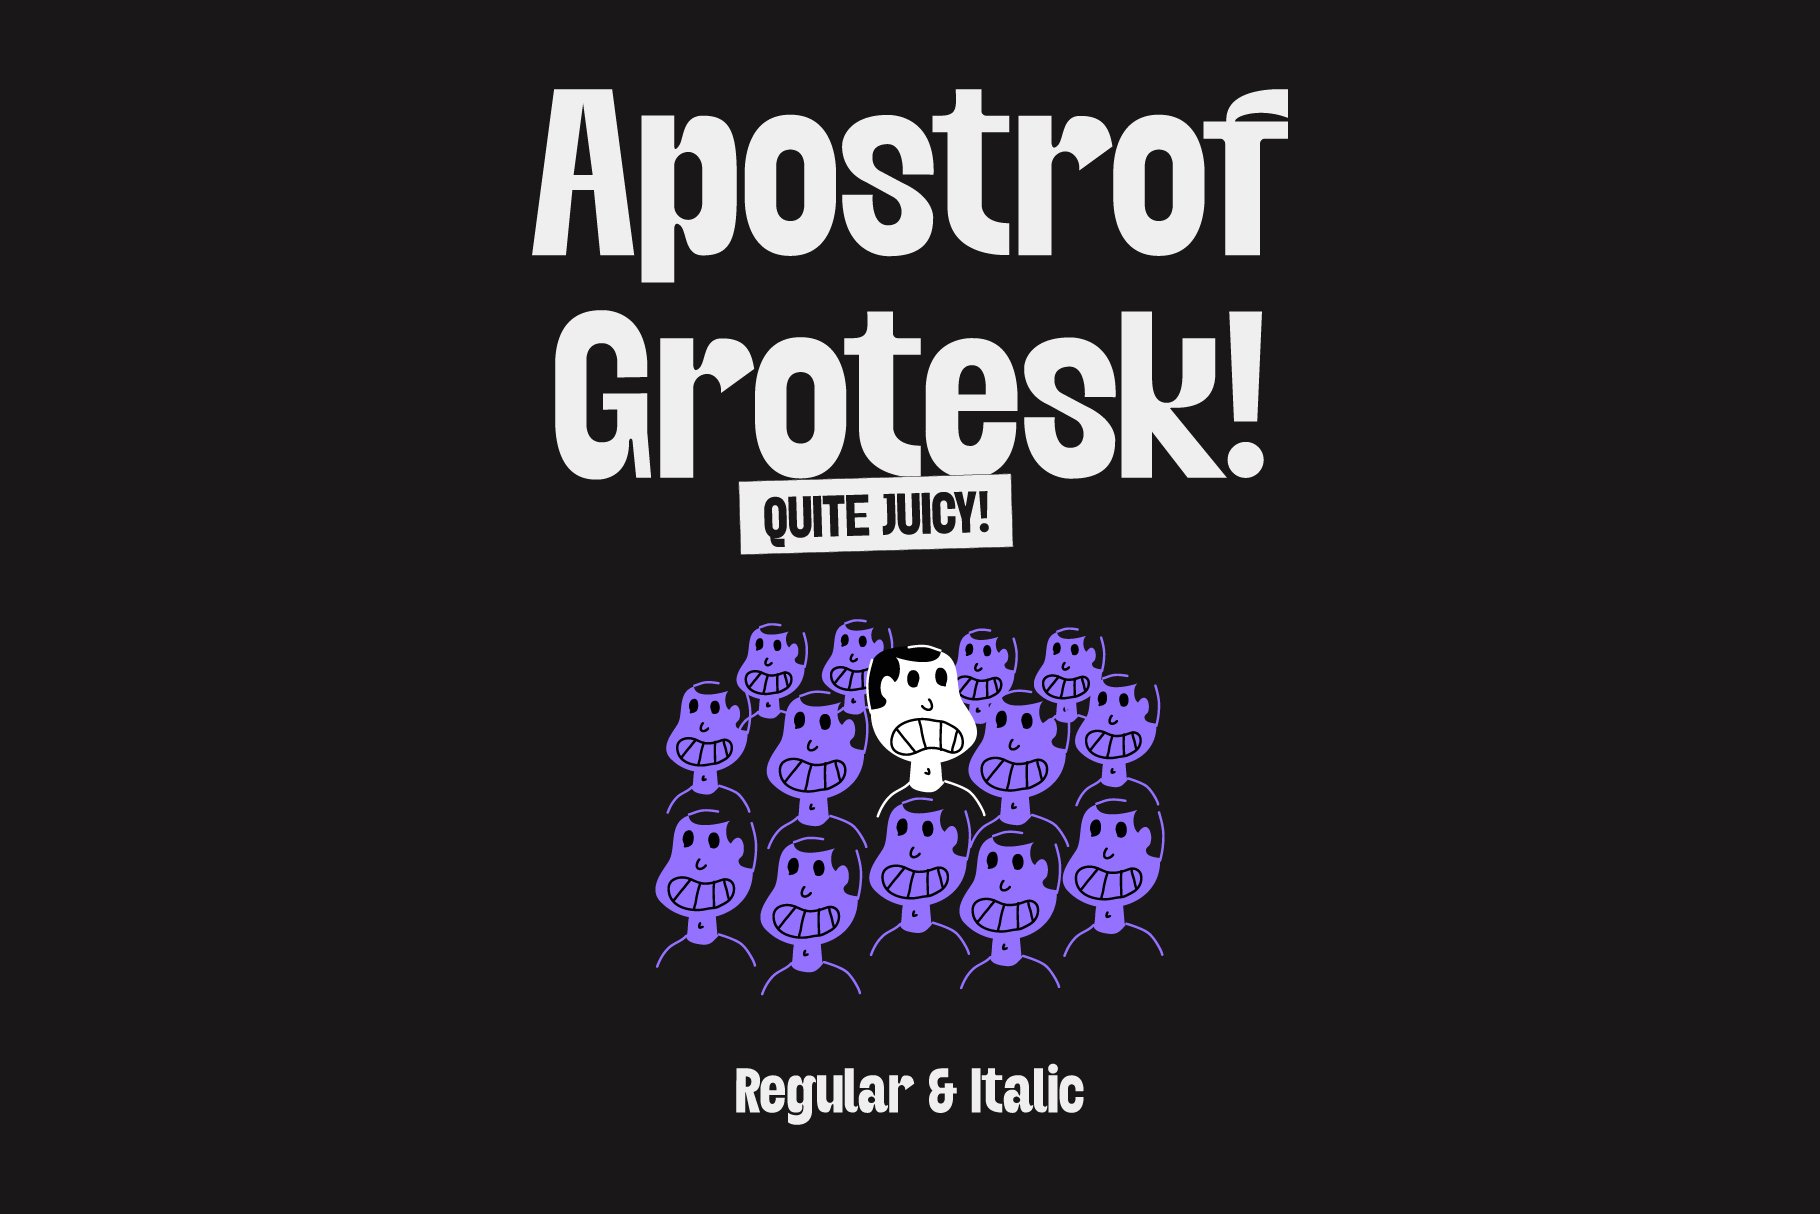 Apostrof - Grotesk Type cover image.